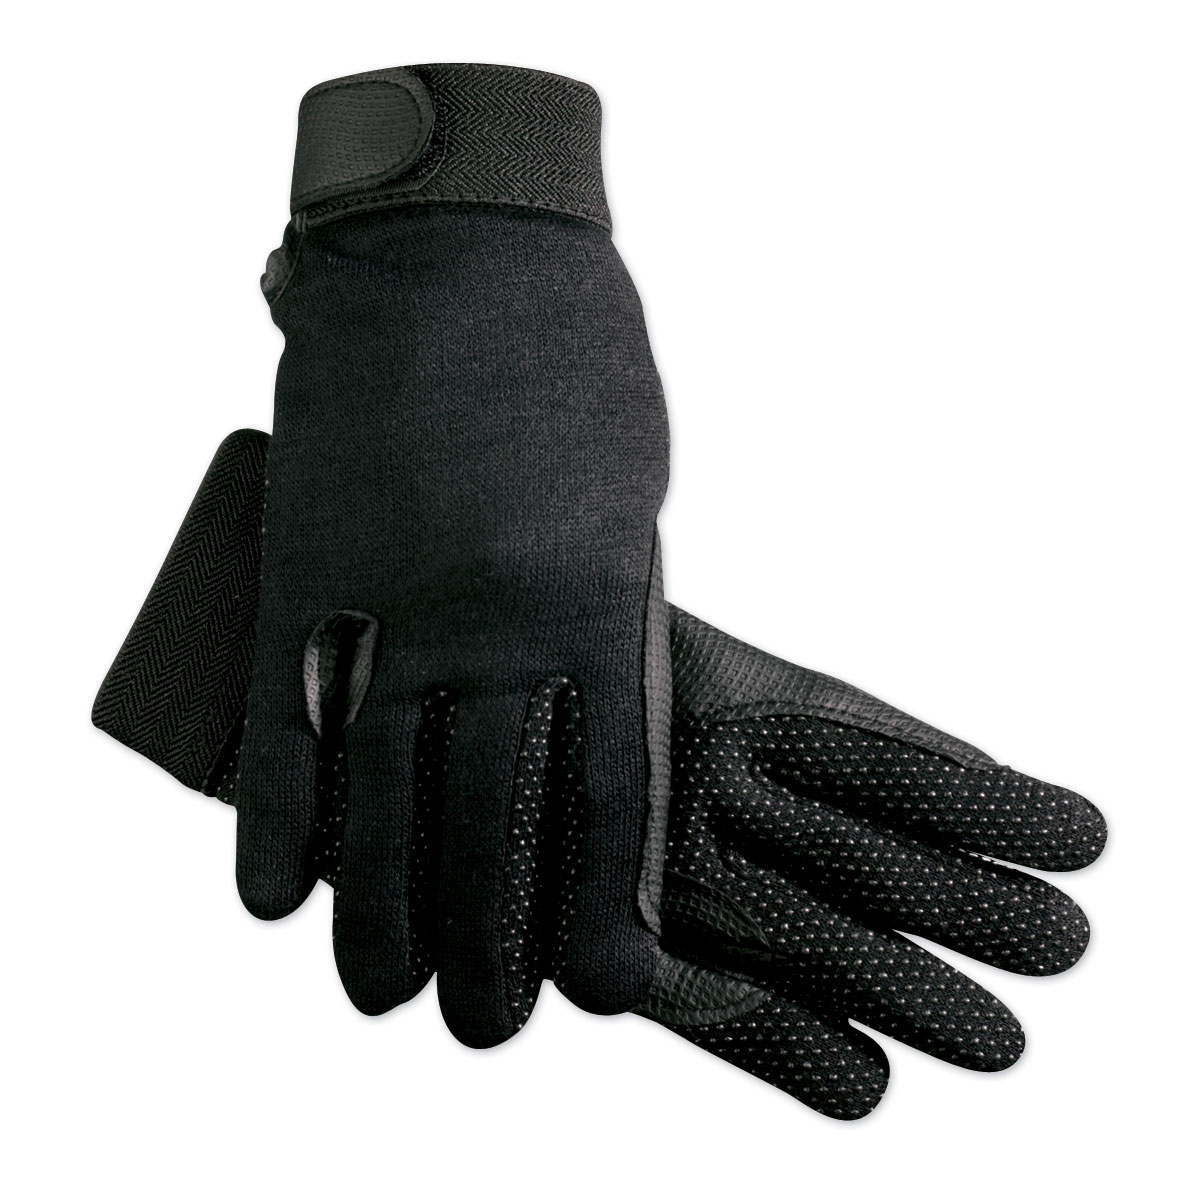 Ryda Black Waterproof Ladies Winter Horse Riding Gloves Thinsulate Lined Snug! 